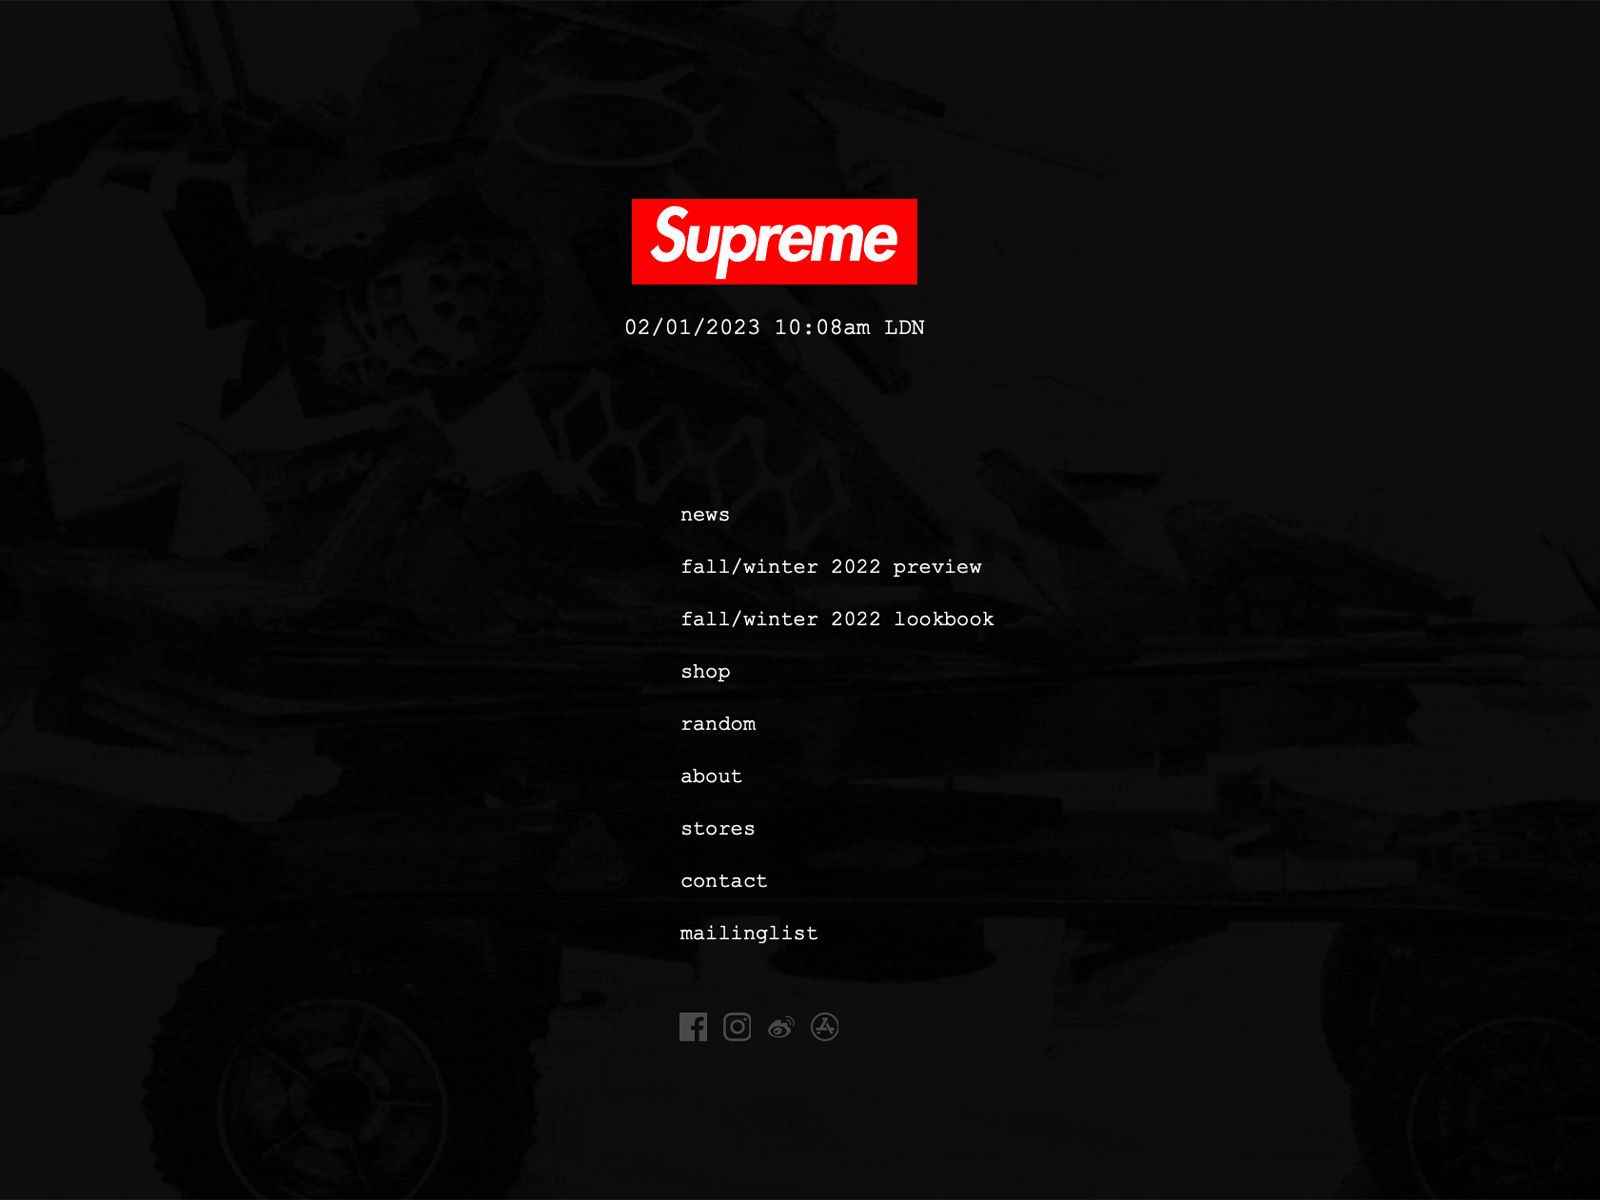 Supreme updates its website